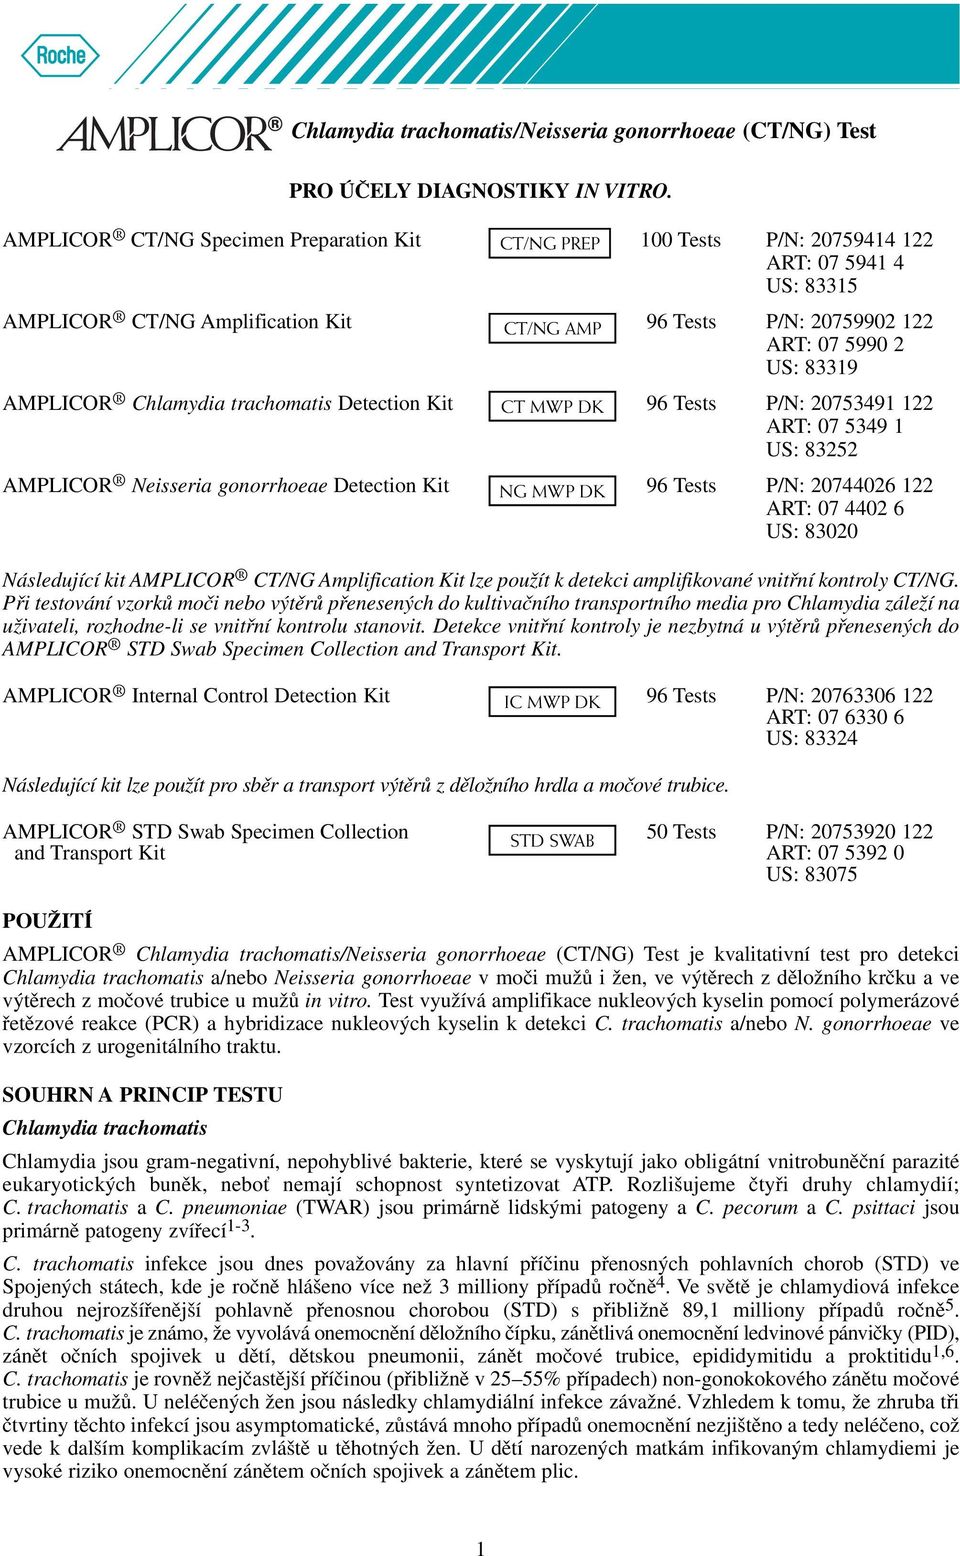 AMPLICOR Chlamydia trachomatis Detection Kit CT MWP DK 96 Tests P/N: 20753491 122 ART: 07 5349 1 US: 83252 AMPLICOR Neisseria gonorrhoeae Detection Kit NG MWP DK 96 Tests P/N: 20744026 122 ART: 07